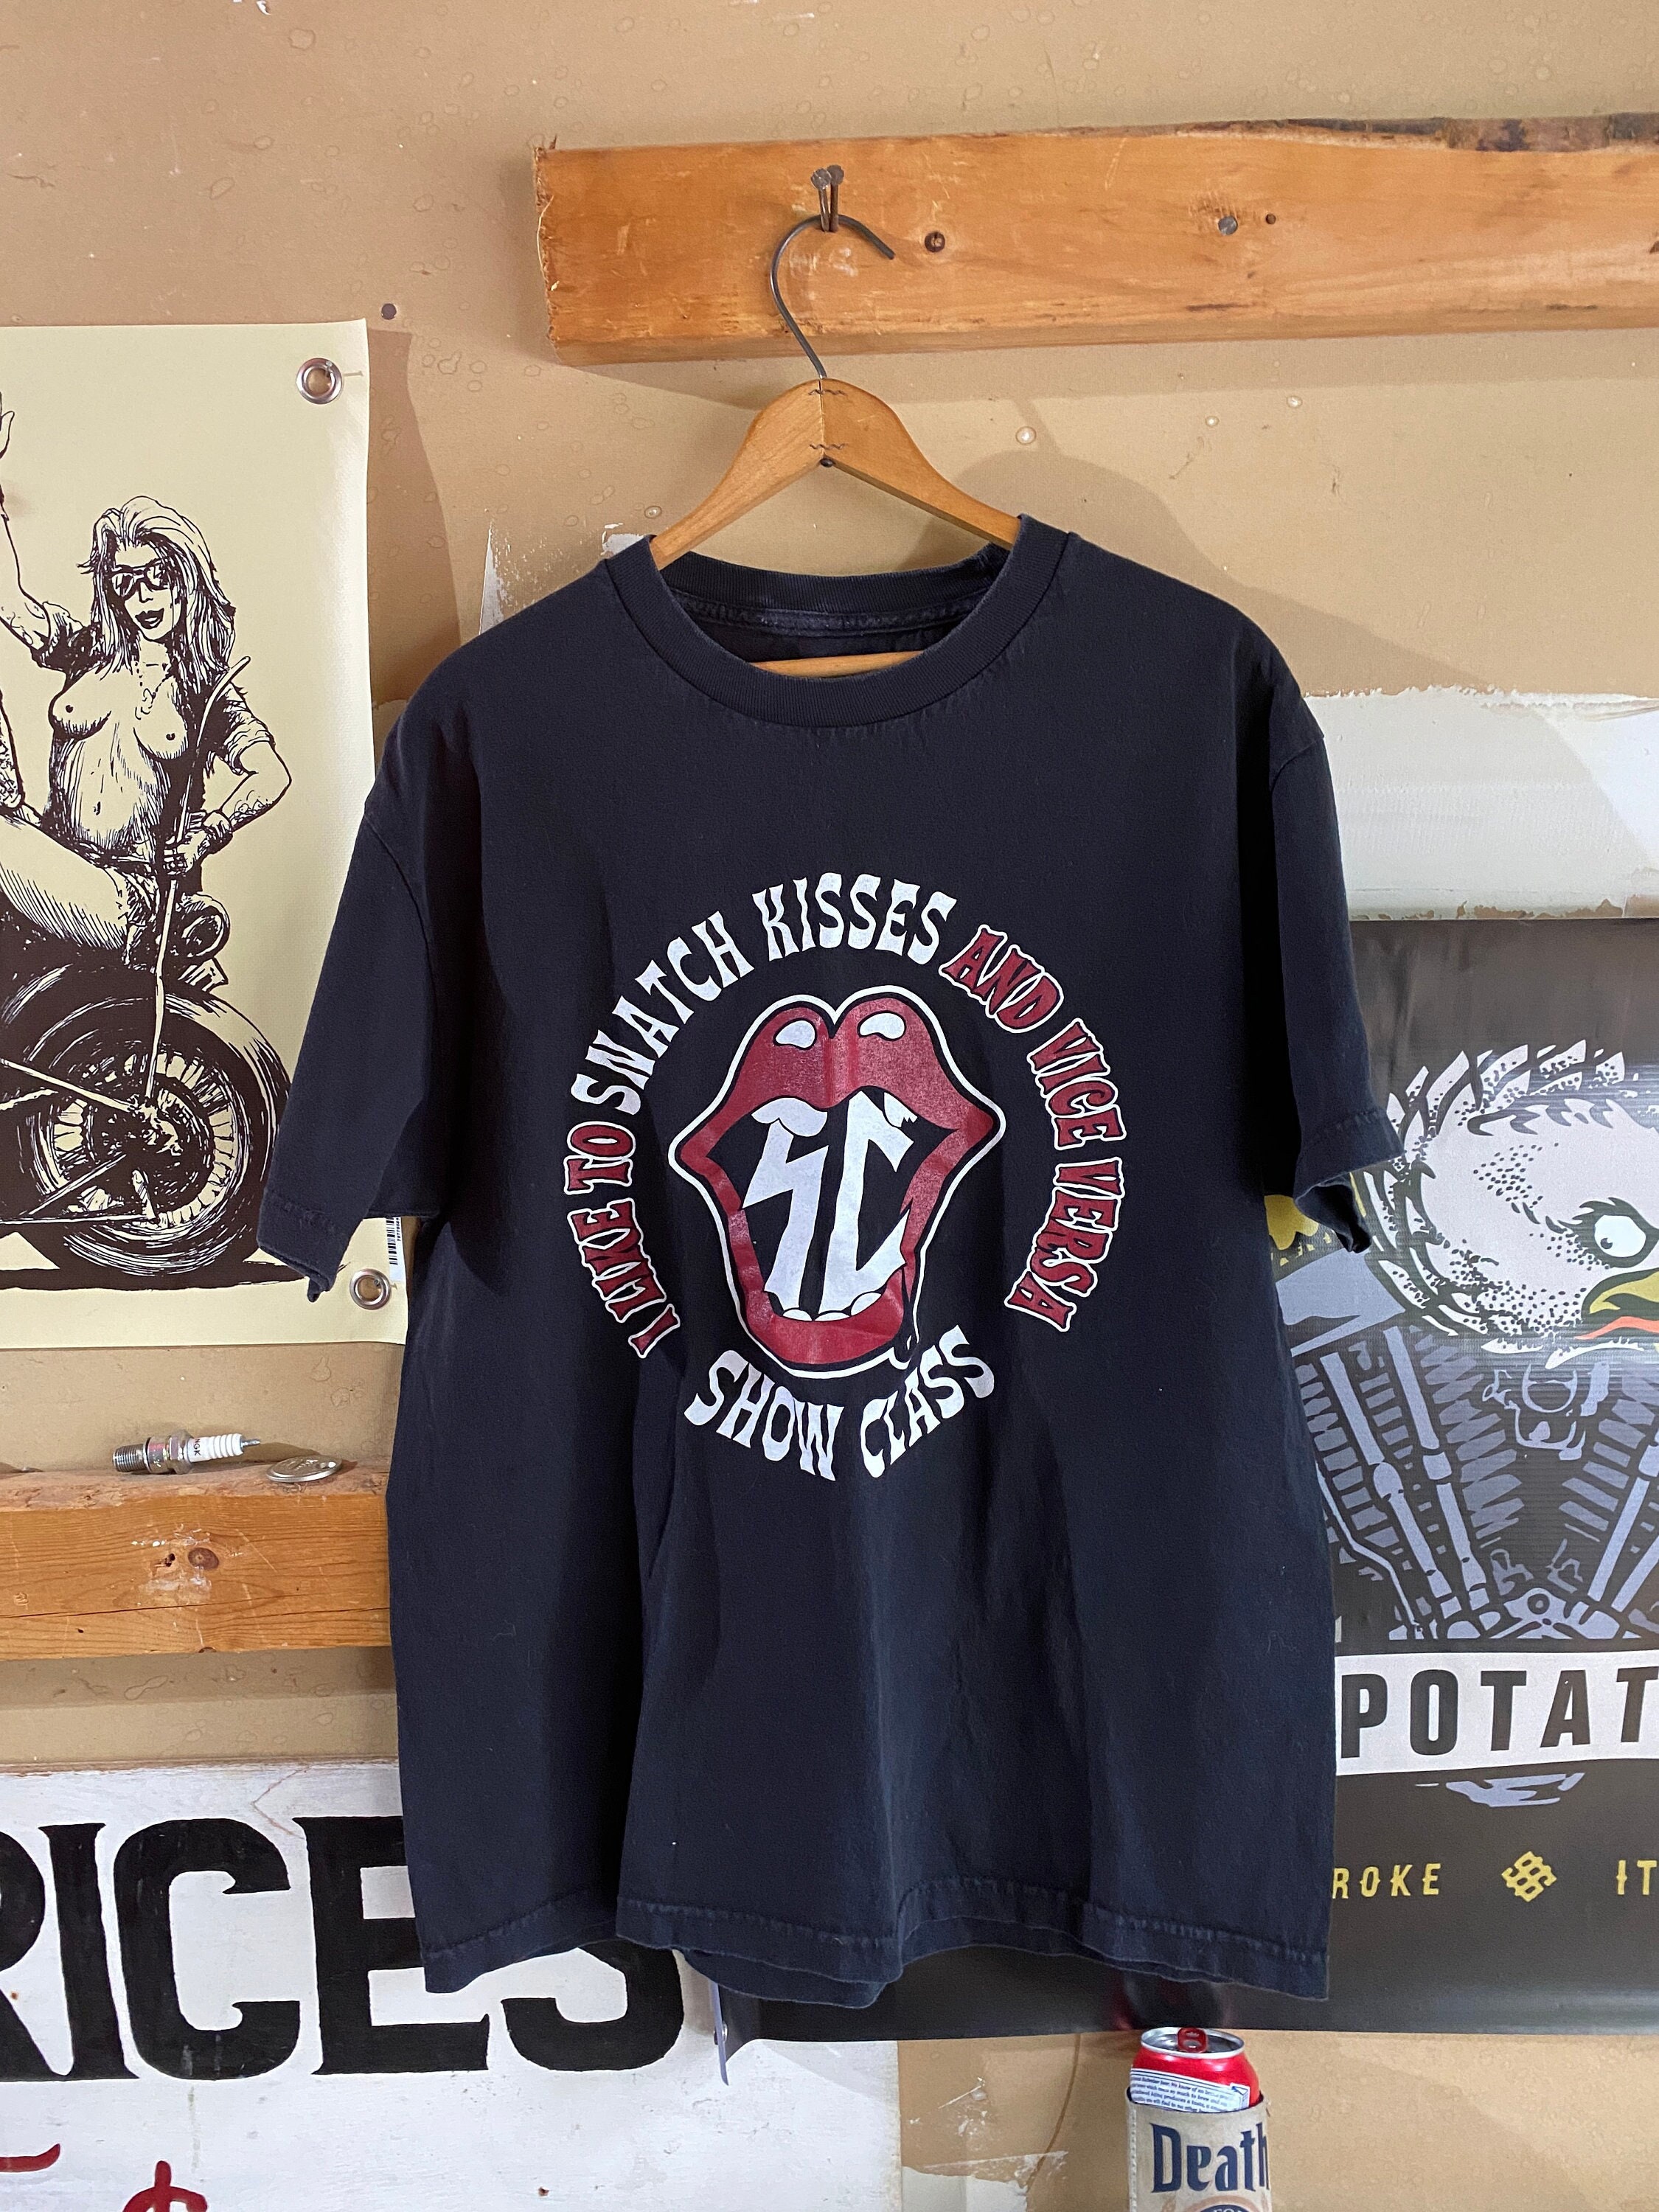 Vintage Scottsdale, Arizona 1996 Iconic Easyriders T-shirt – DESERT MOSS  VINTAGE